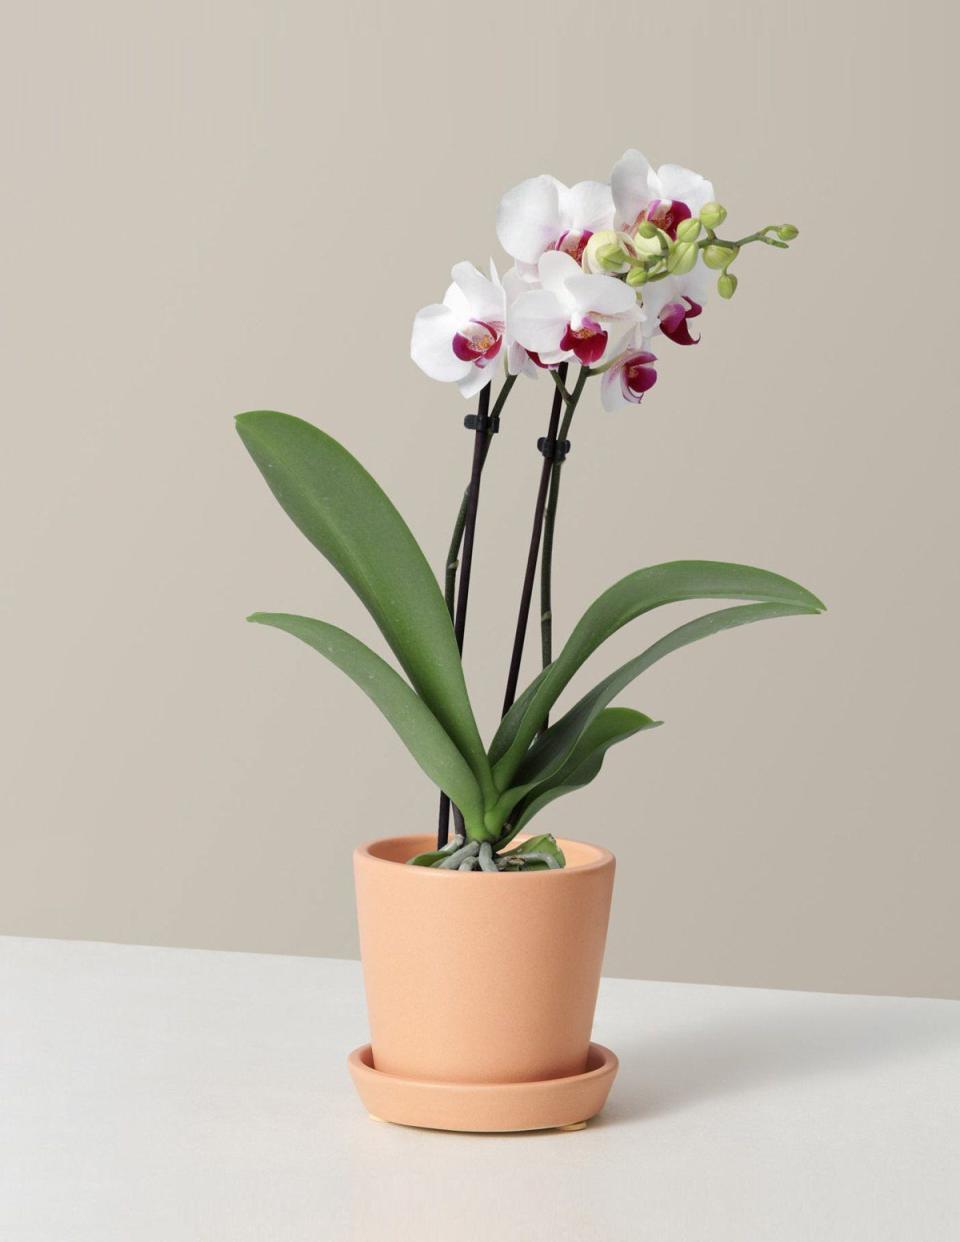 54) Petite White Orchid